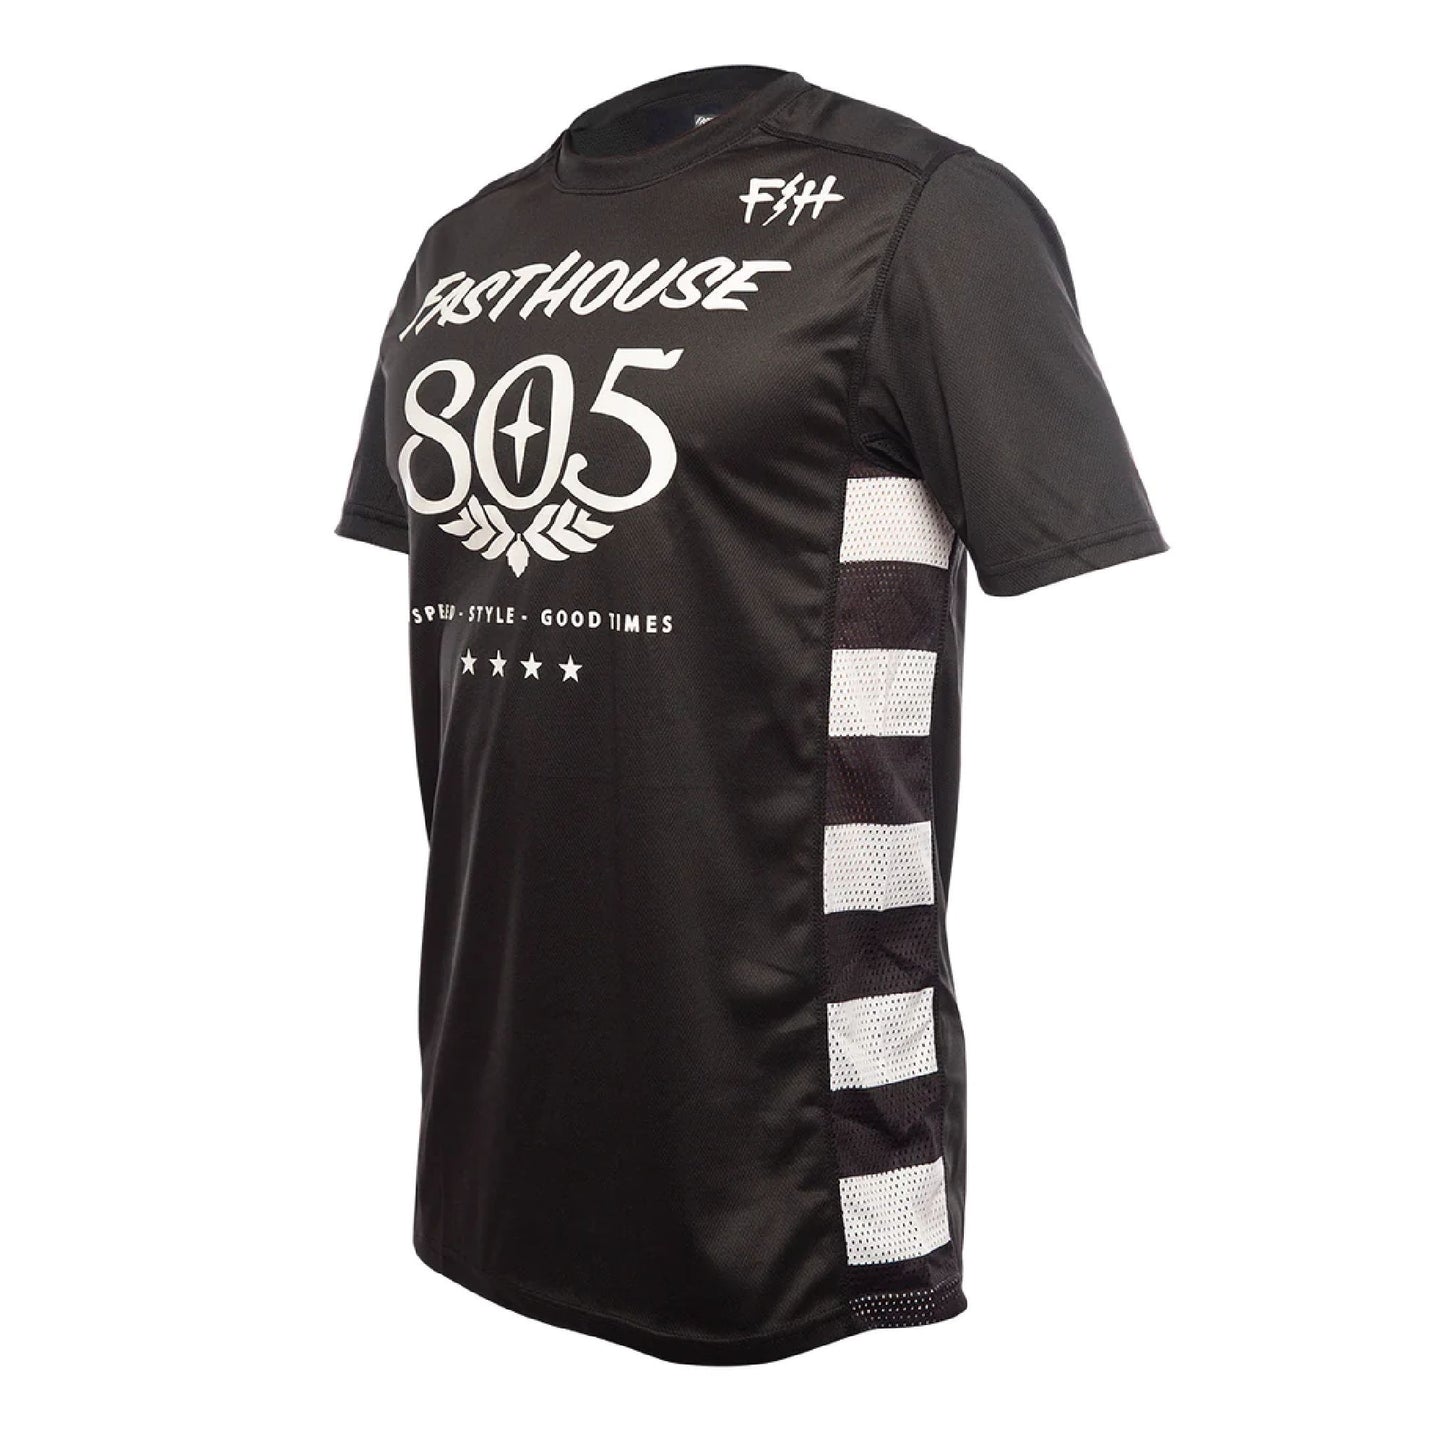 Fasthouse Classic 805 SS Jersey Black Bike Jerseys